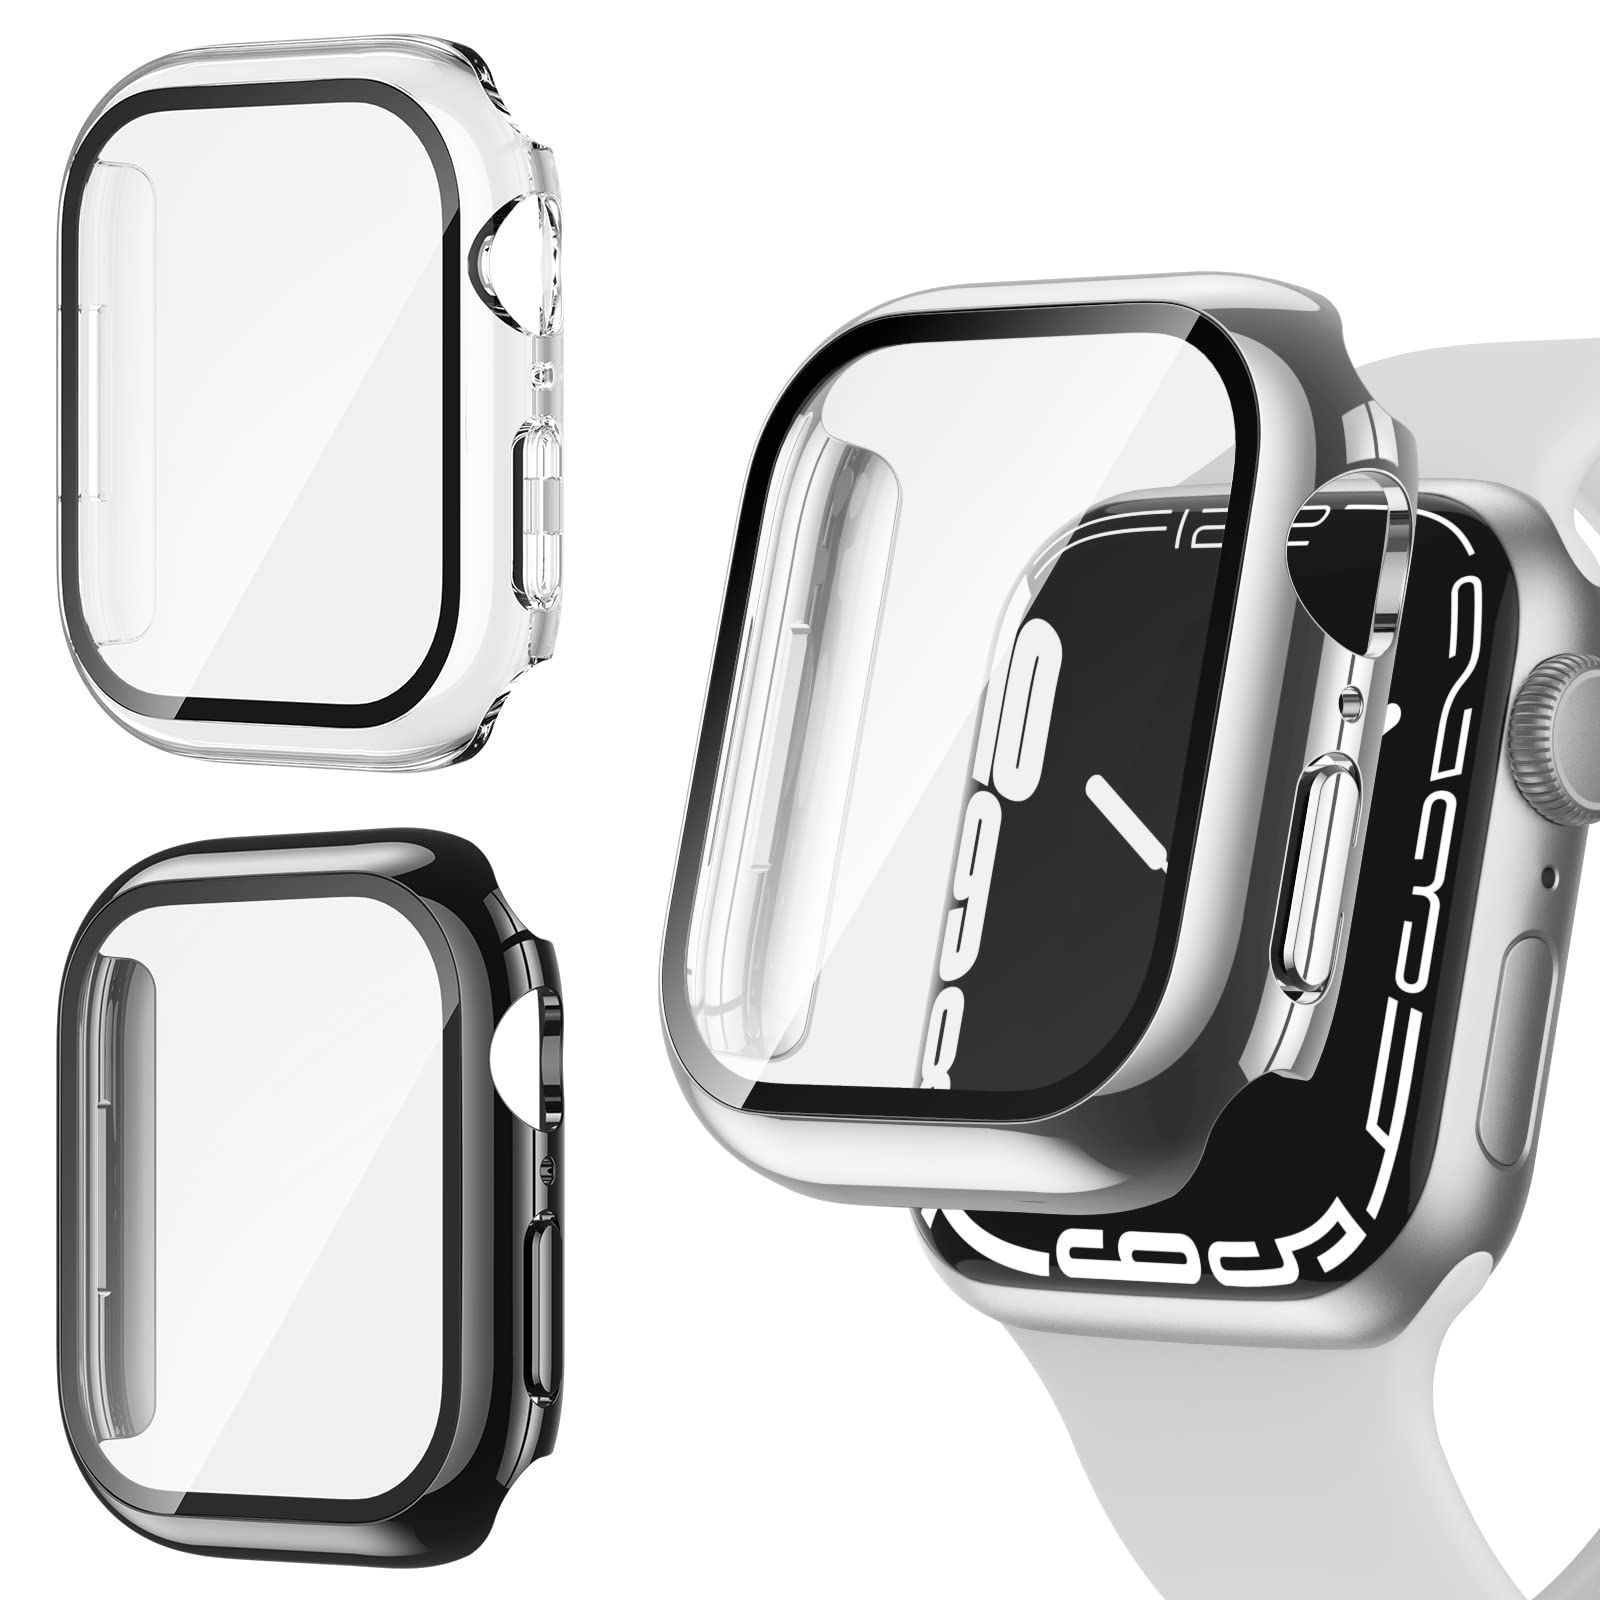 Apple Watch カバー アップルウォッチ8 7ケース 45mm ブラック